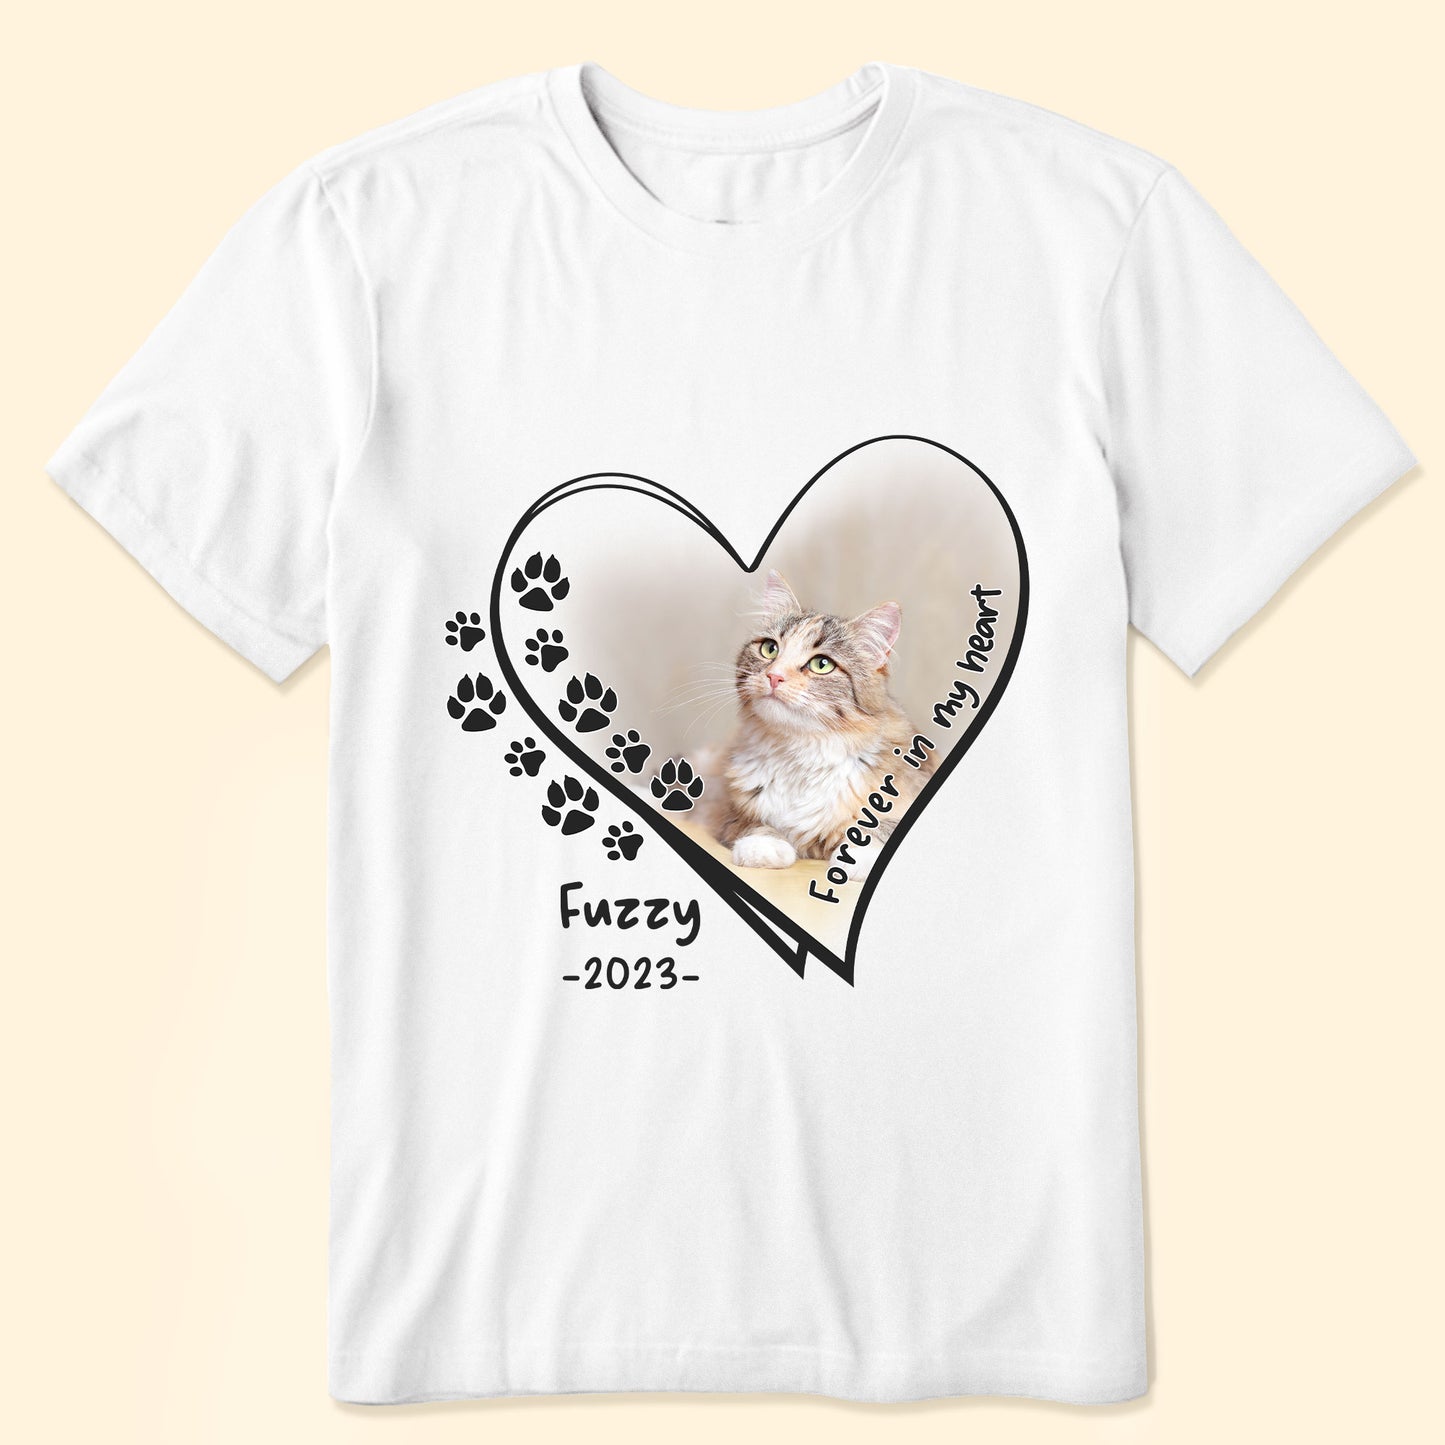 Pet Remembrance  - Personalized Photo Shirt